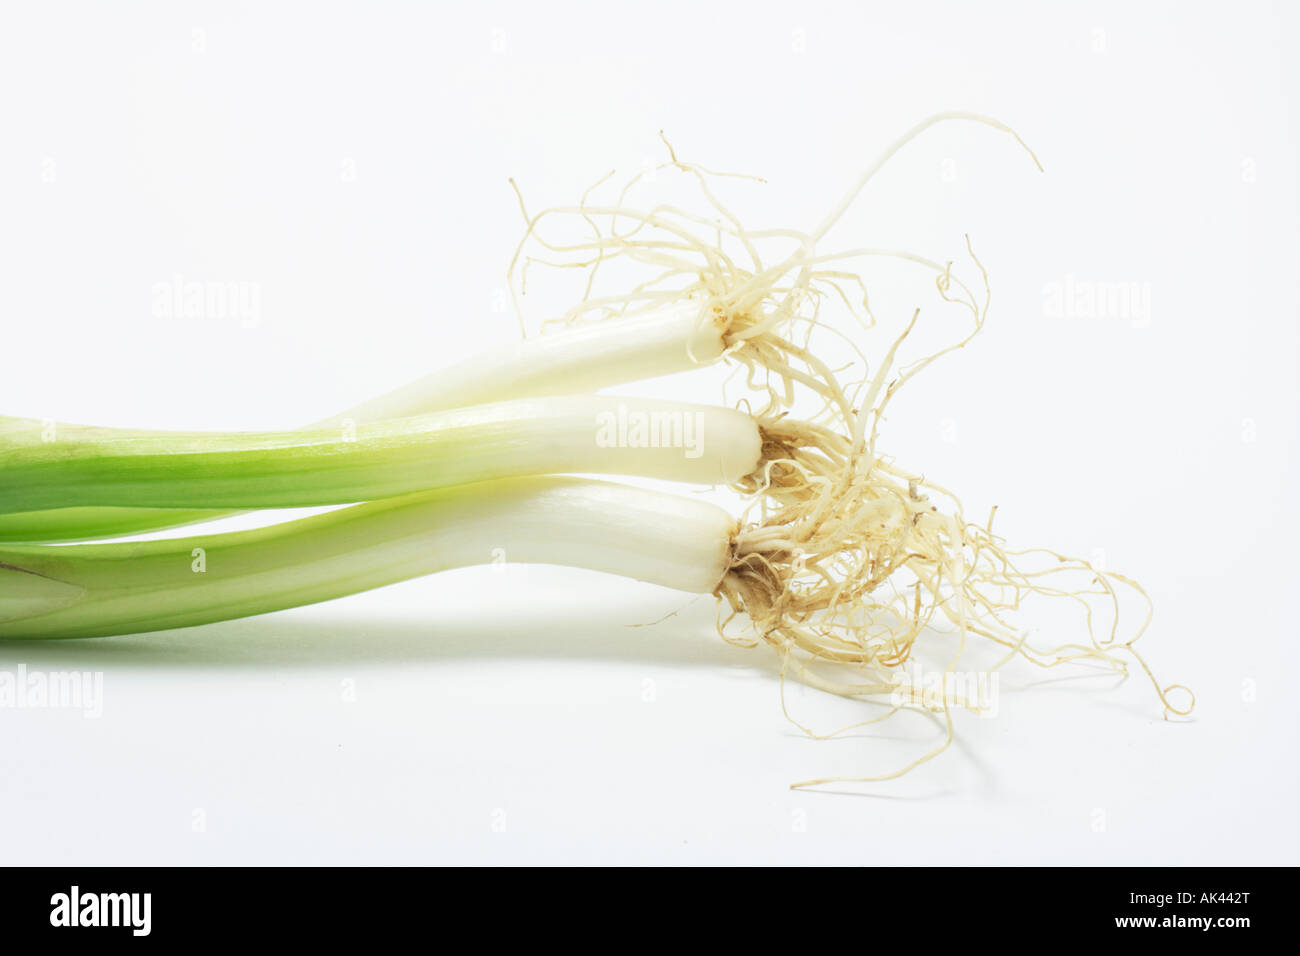 Spring Onions Stock Photo